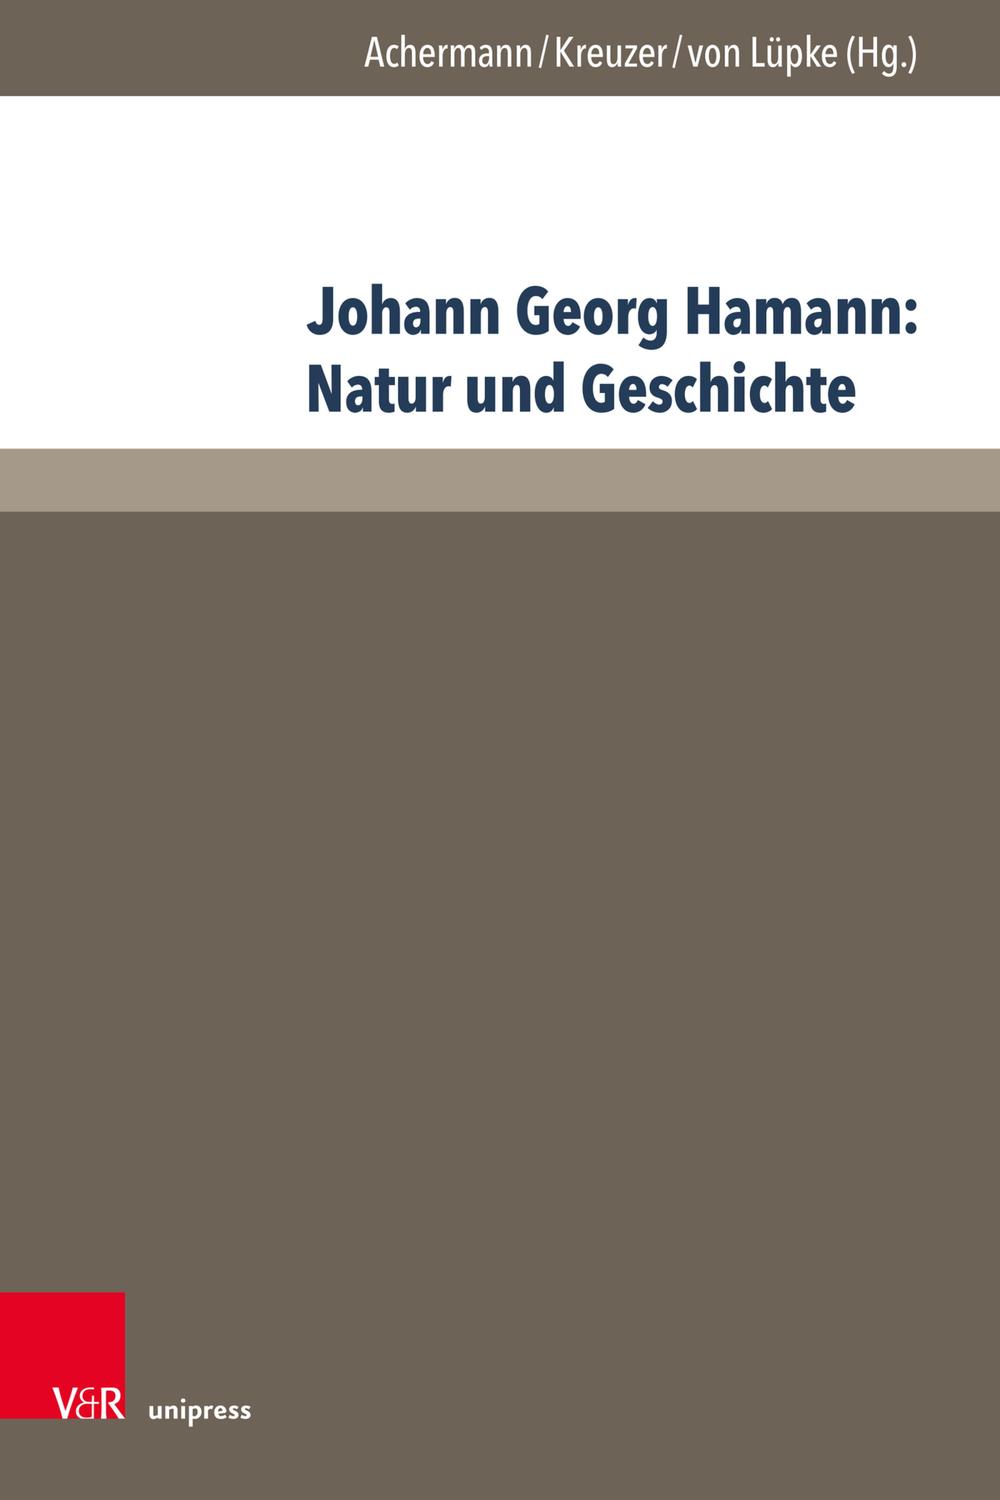 Johann Georg Hamann: Natur und Geschichte - Eric Achermann, Johann Kreuzer, Johannes von Lüpke